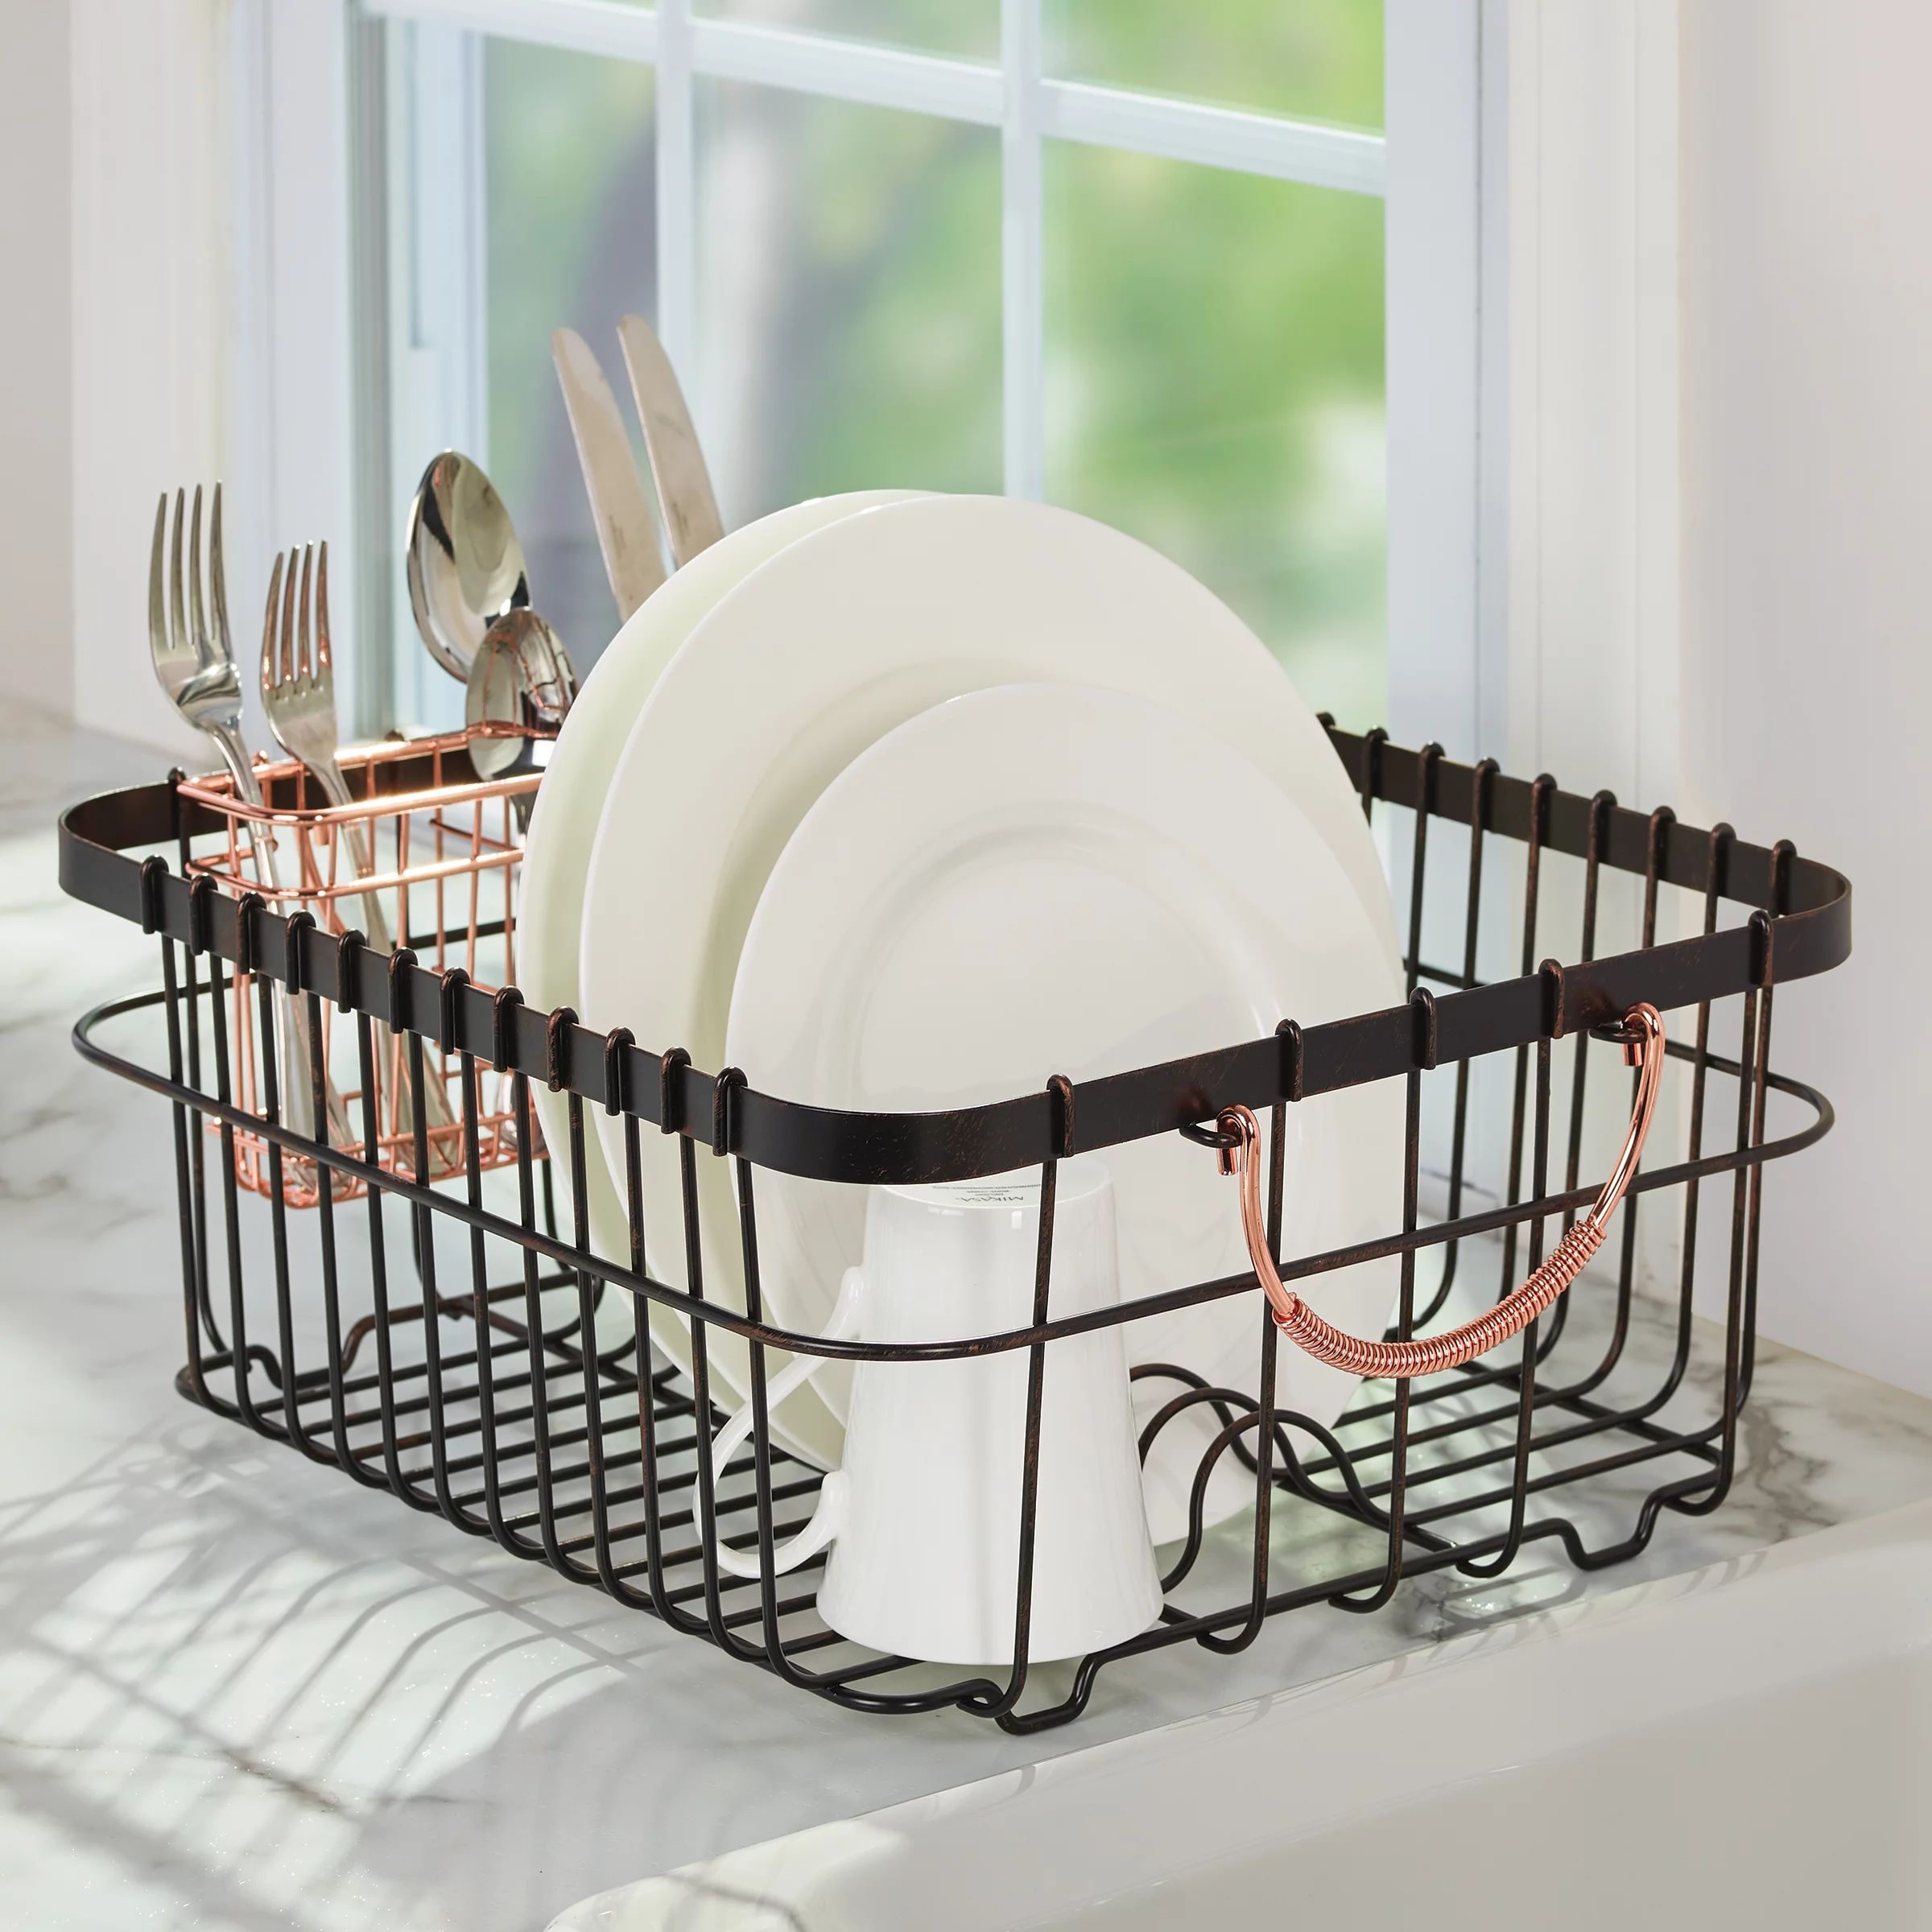 Better Homes & Garden General Store Dish Rack with Copper Handles | Walmart (US)